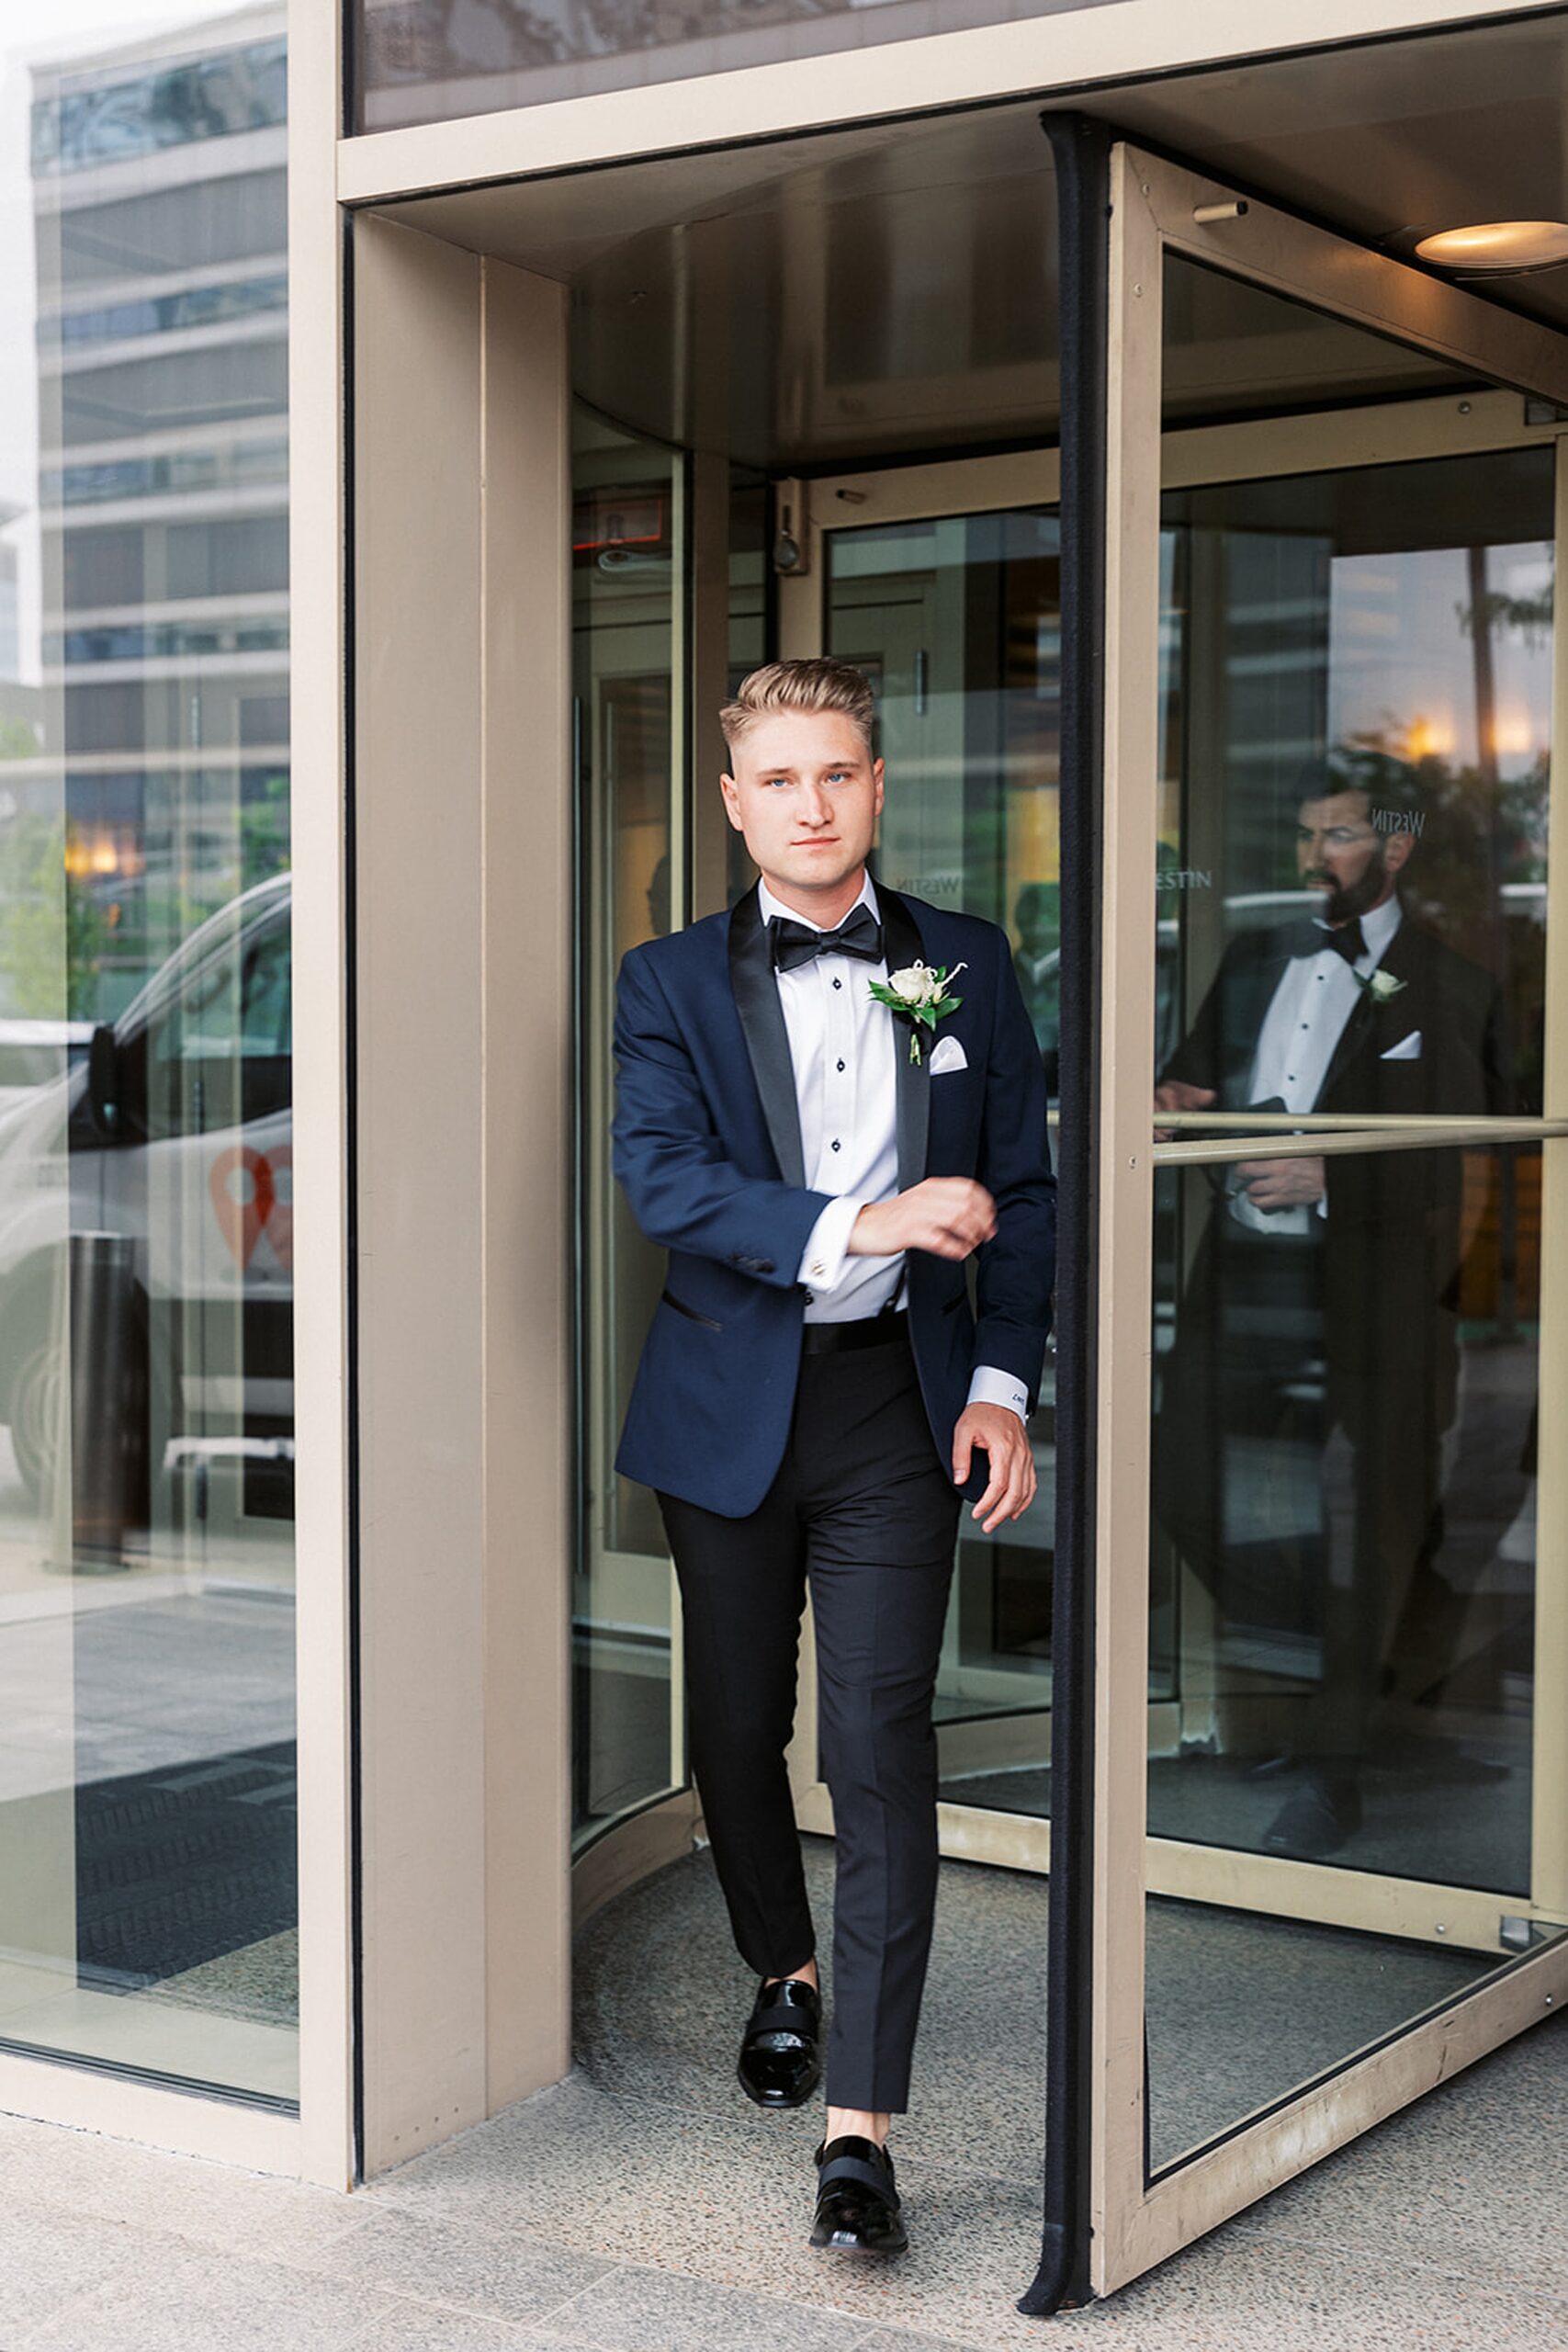 A groom walks through a revolving door in a blue tuxedo jacket and black pants